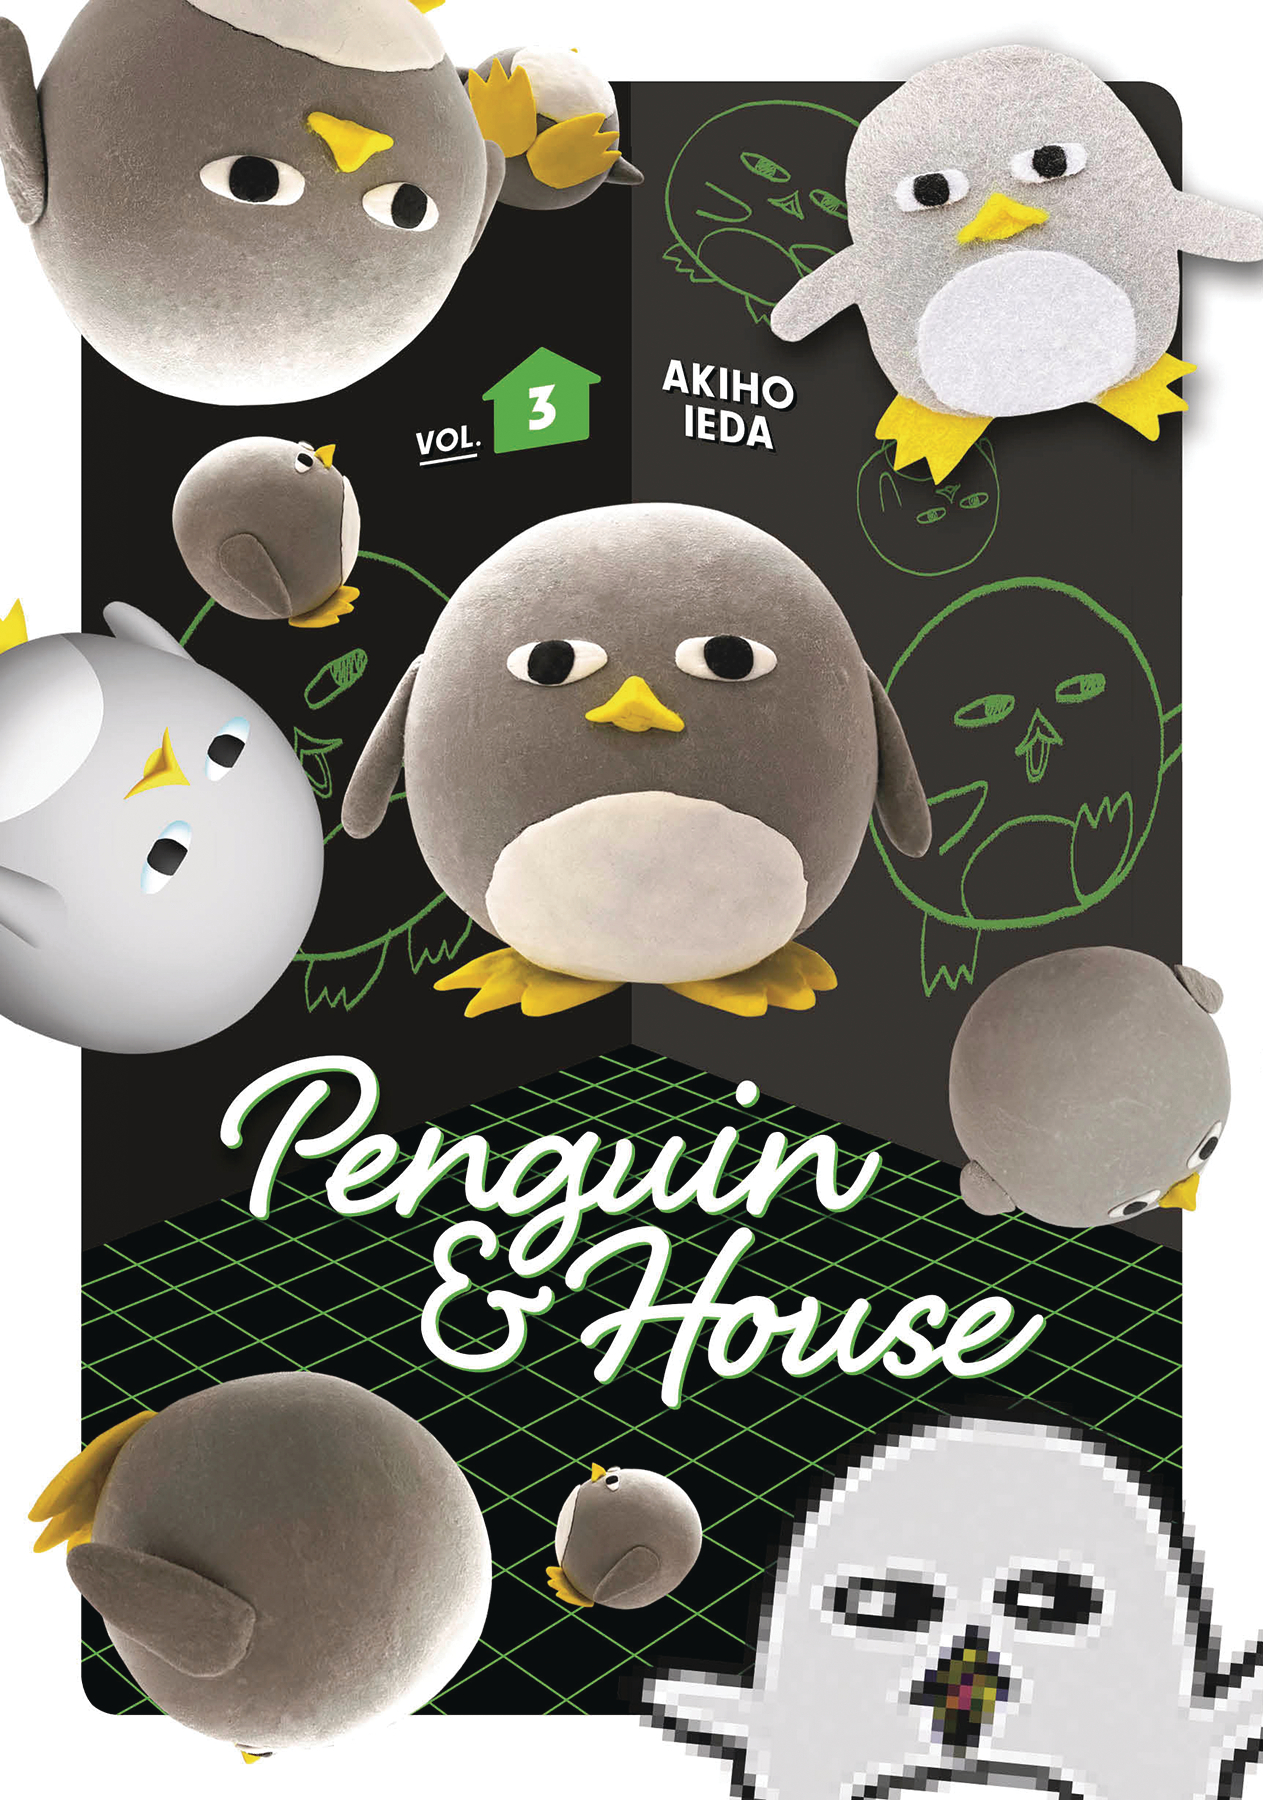 Penguin & House Manga Volume 3